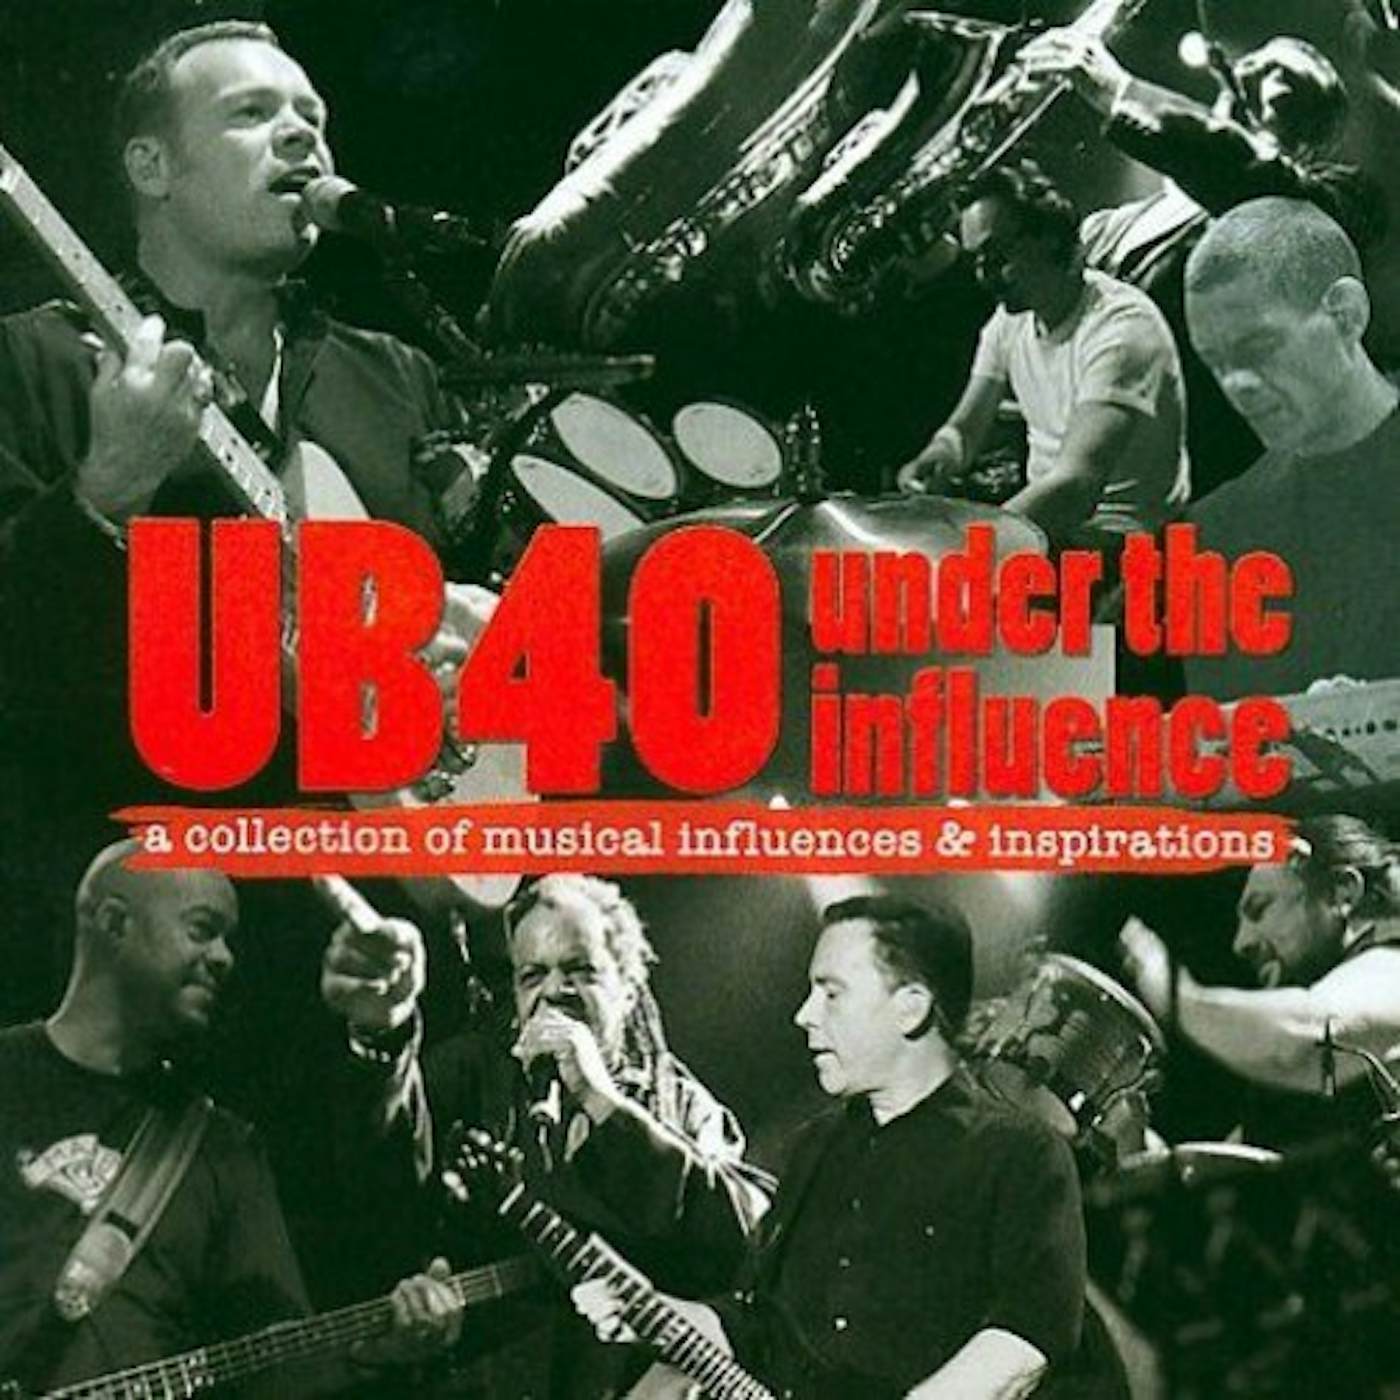 UB40 UNDER THE INFLUENCE CD